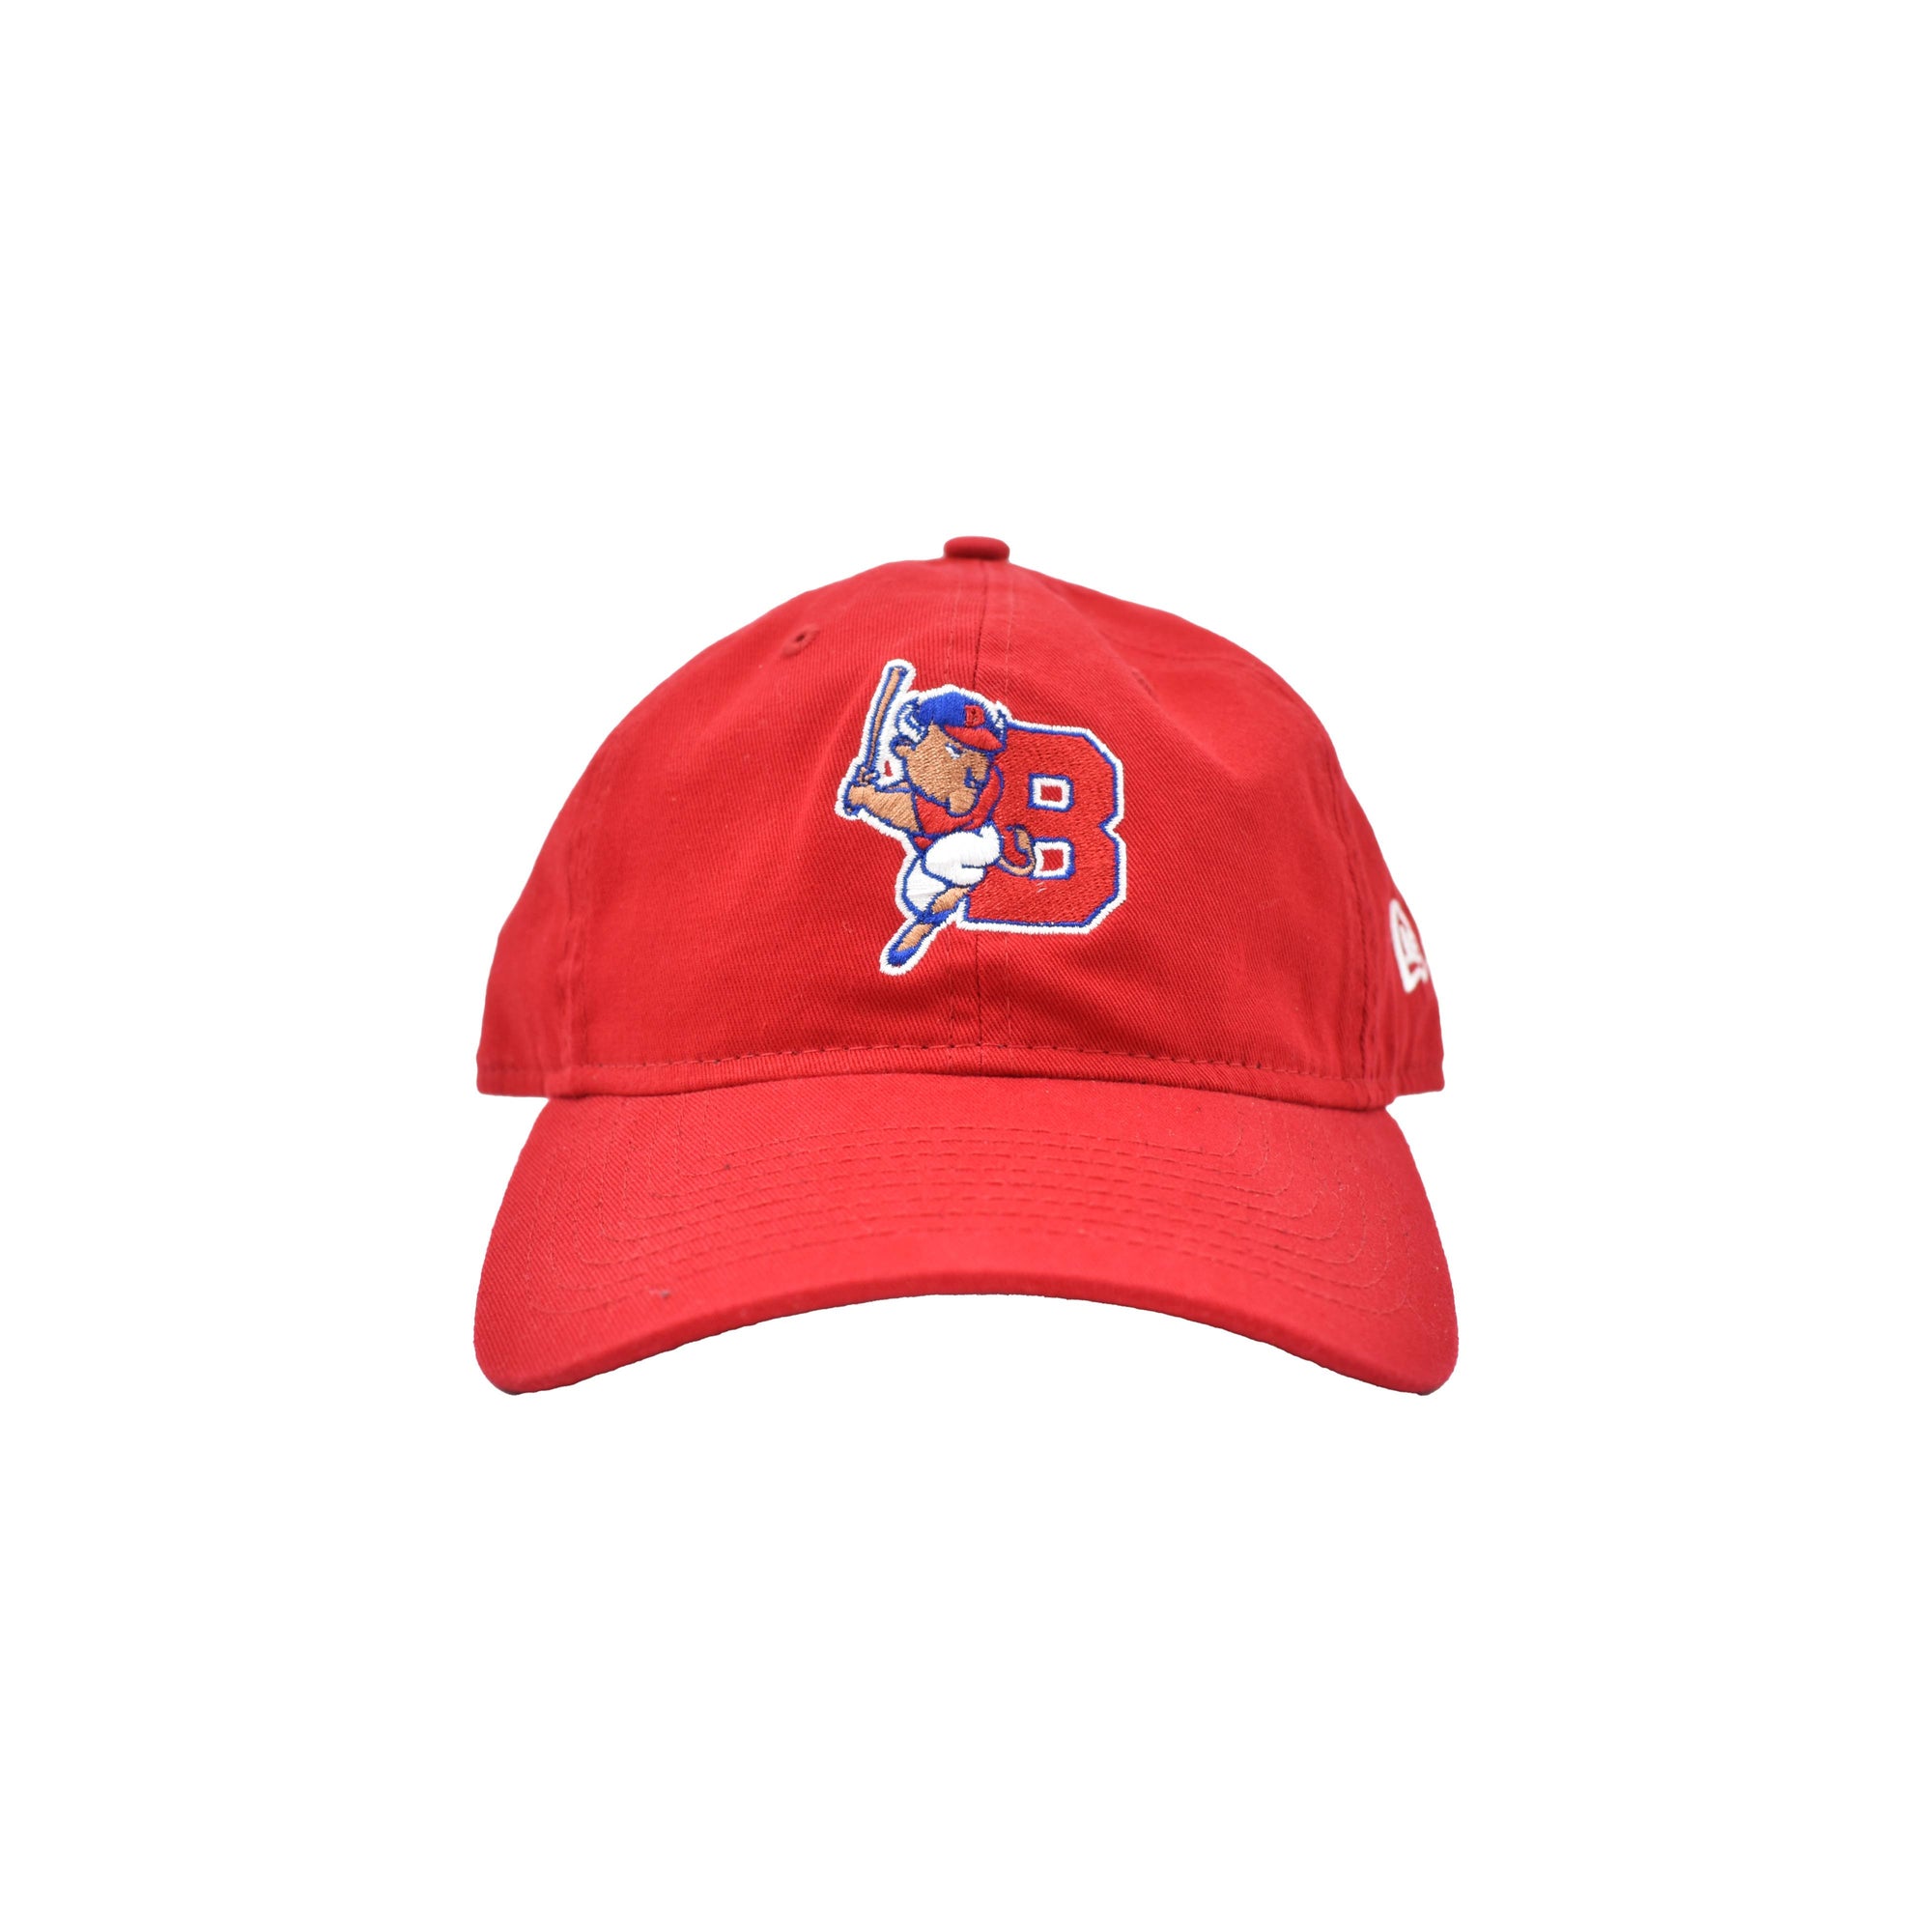 bflo store New Era Buffalo Bison Red Adjustable Hat